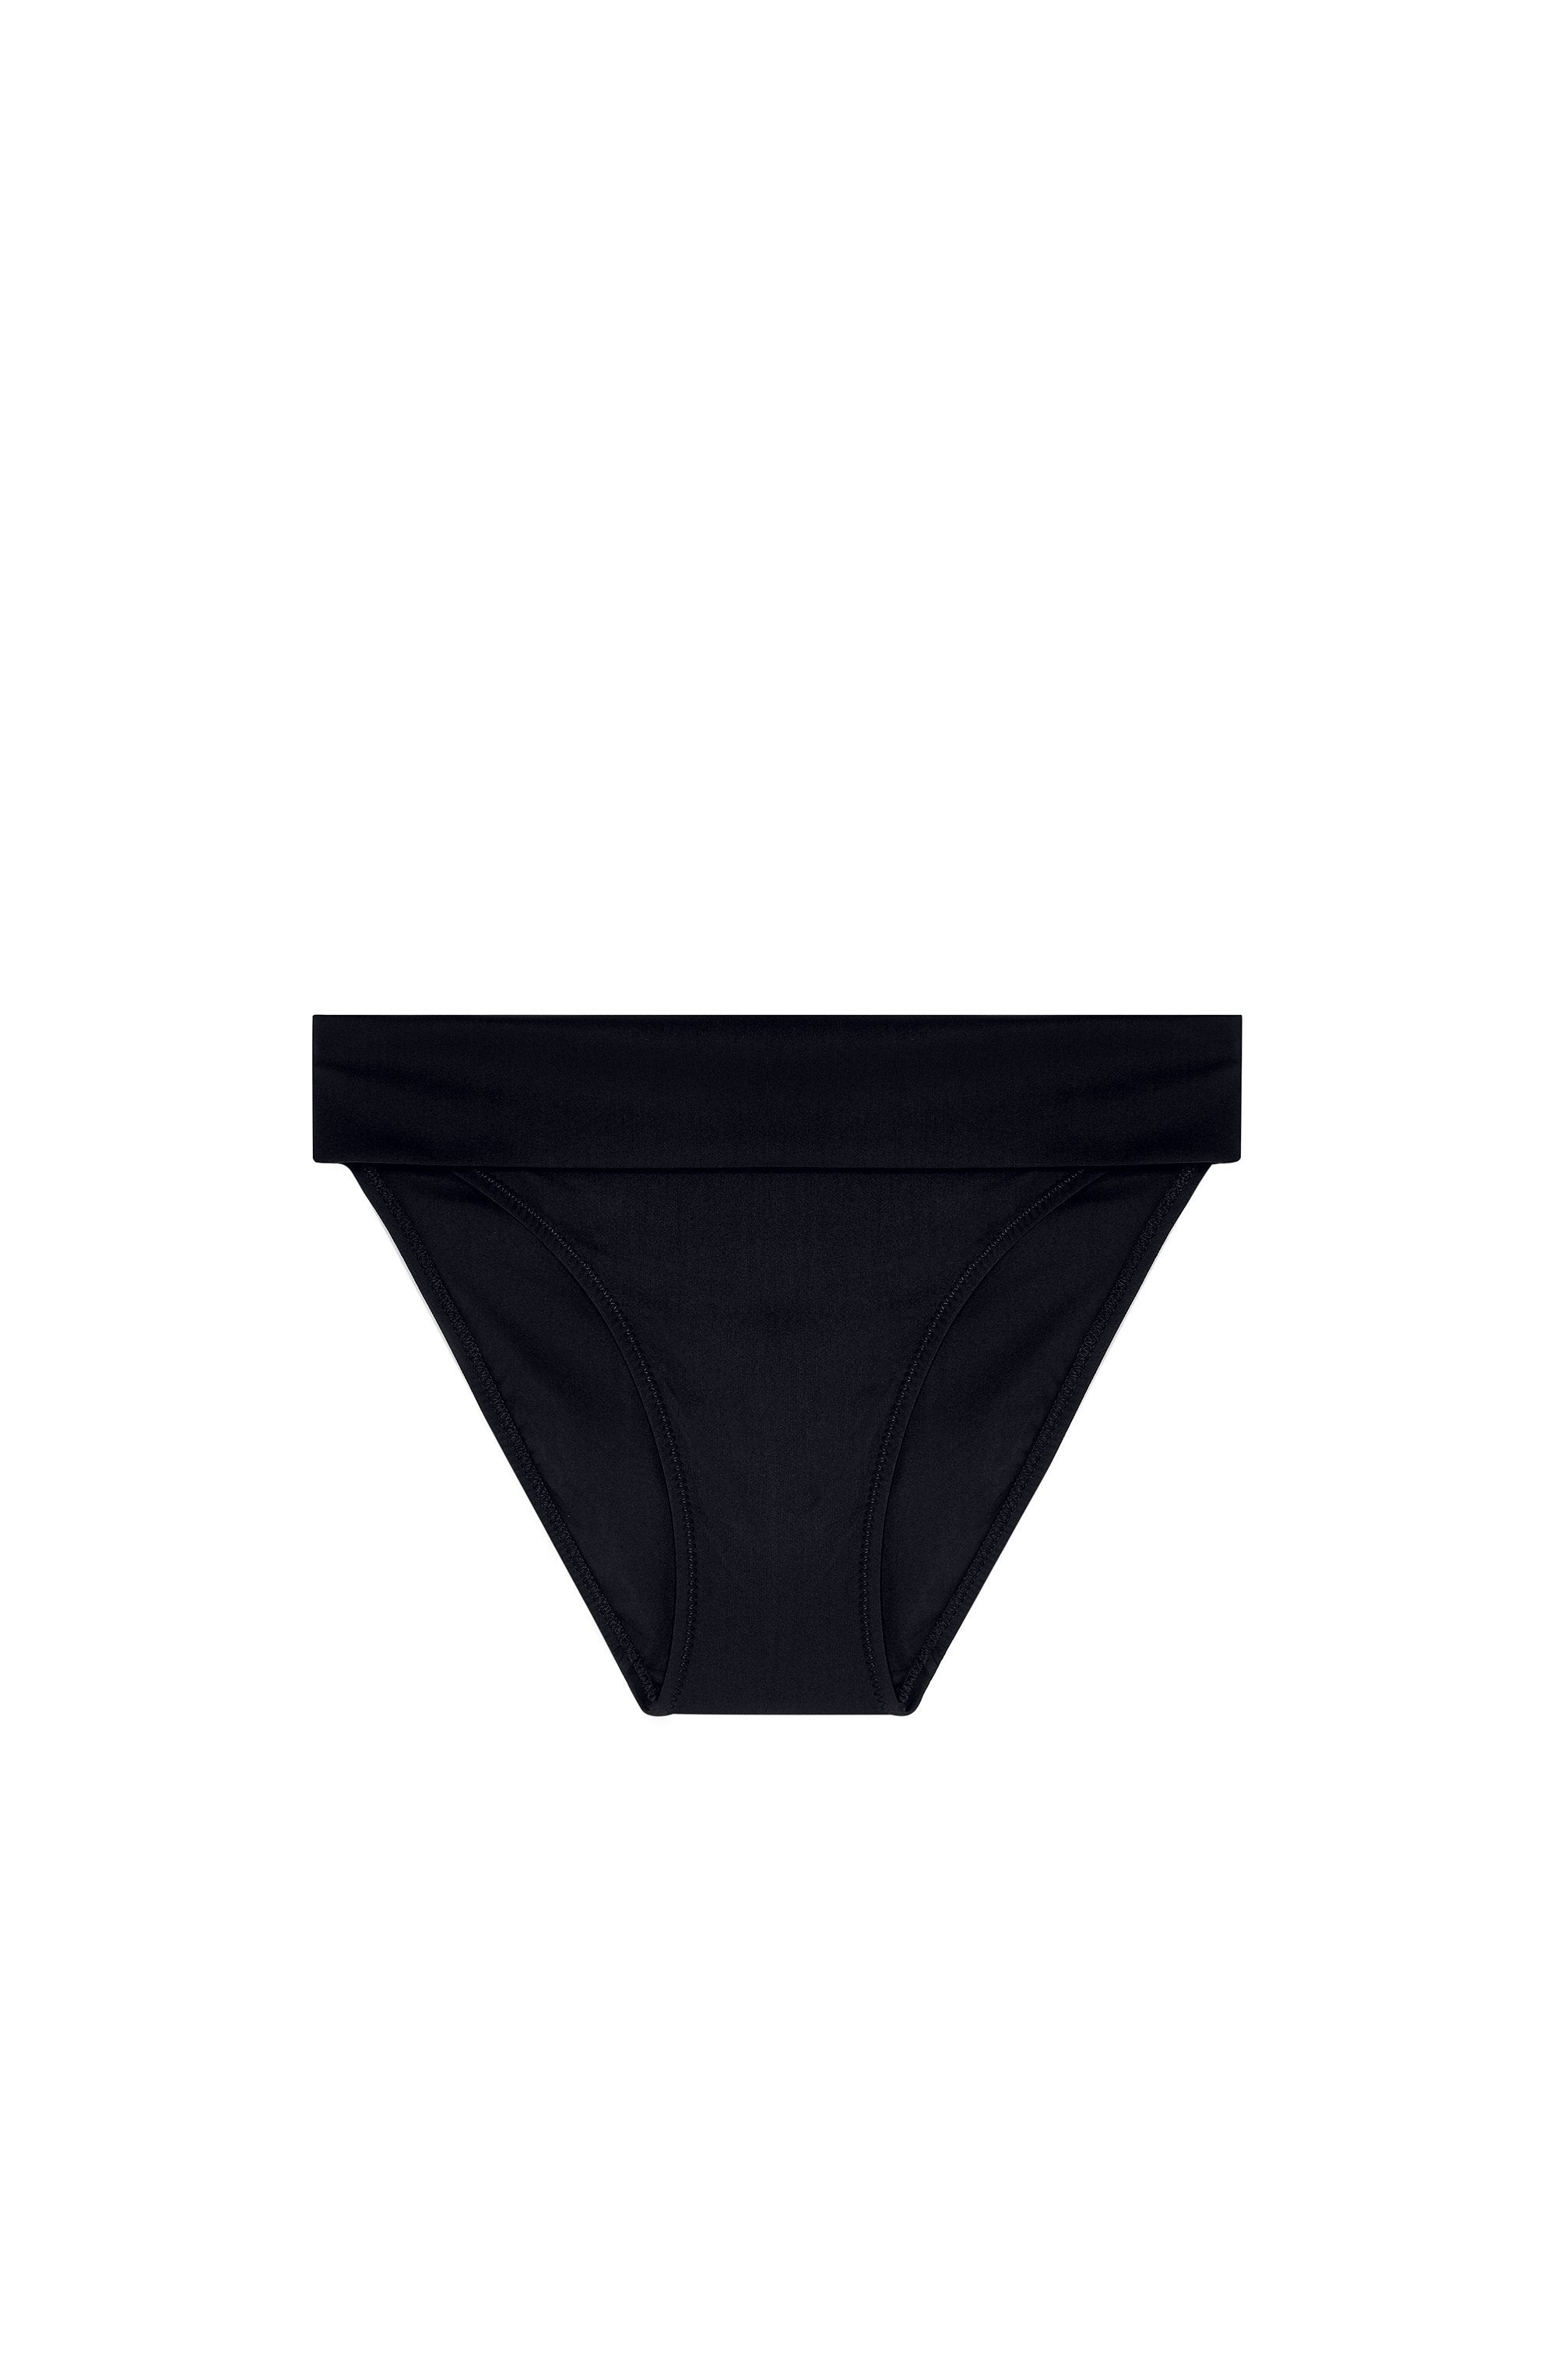 tobago - Black high waist bikini bottoms